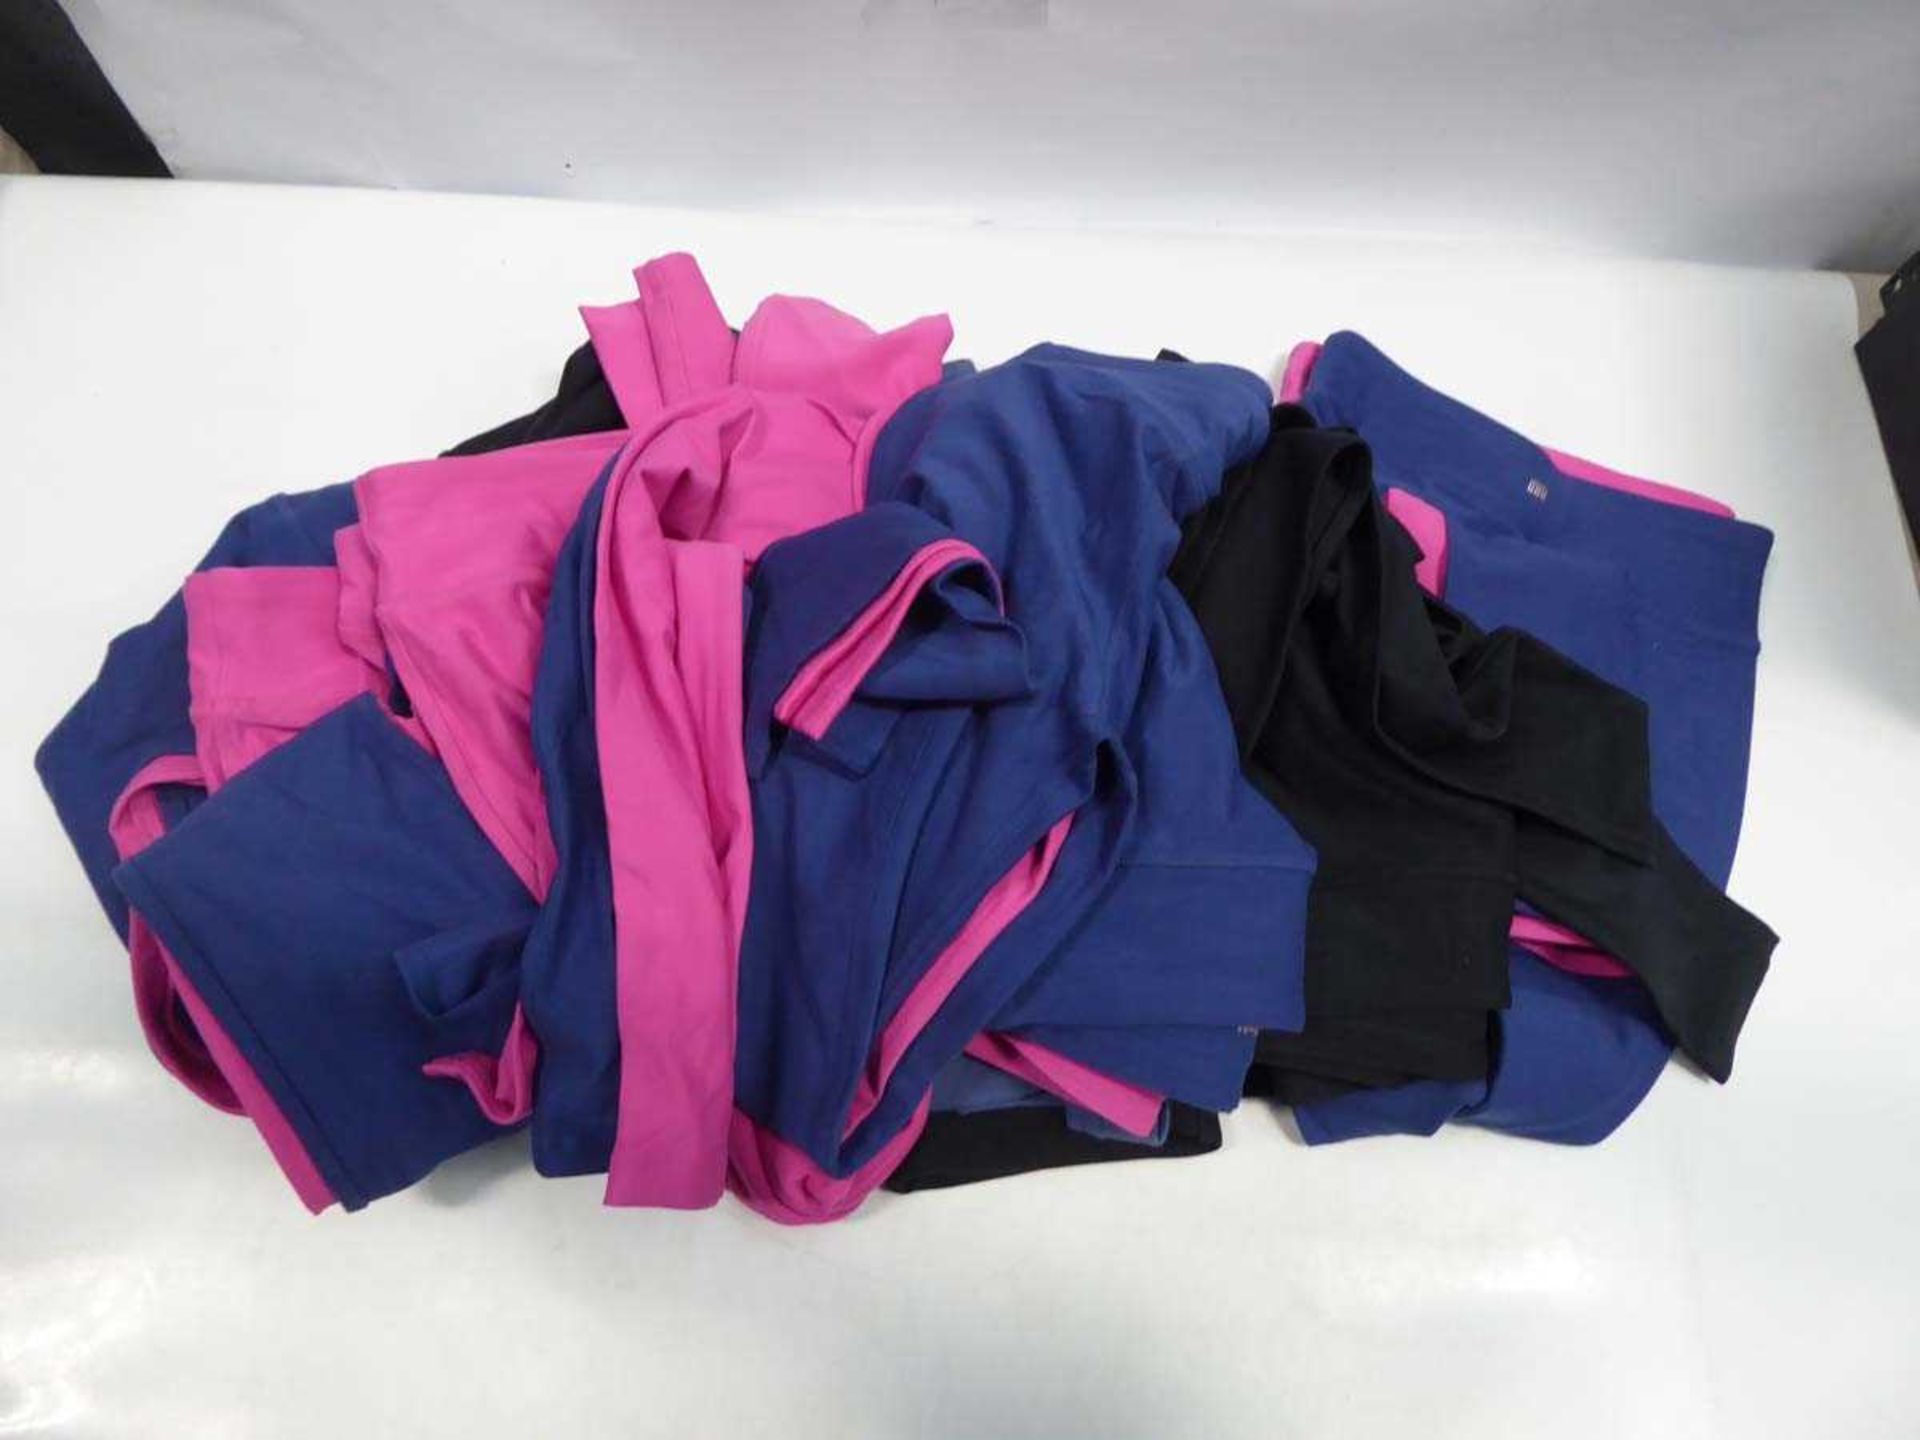 +VAT Quantity of Mondetta active leggings in pink, blue and black